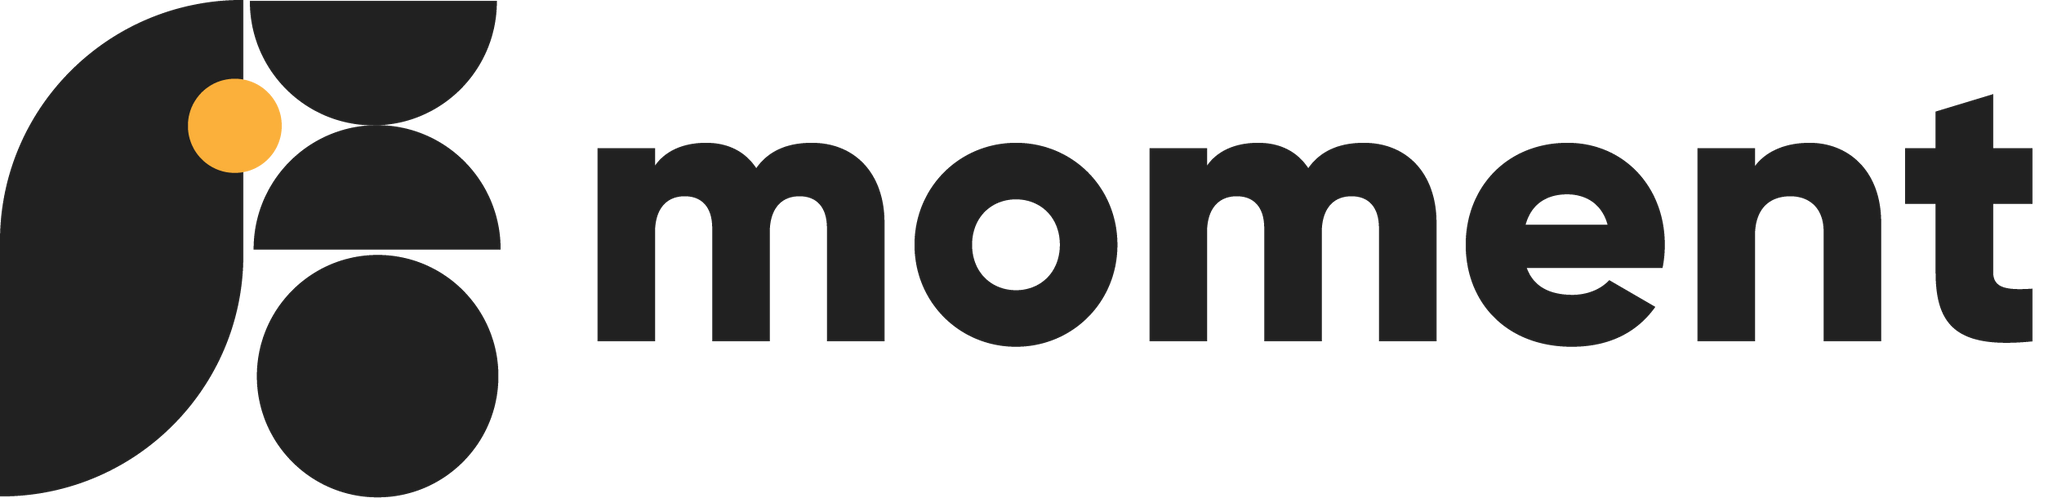 moment logo